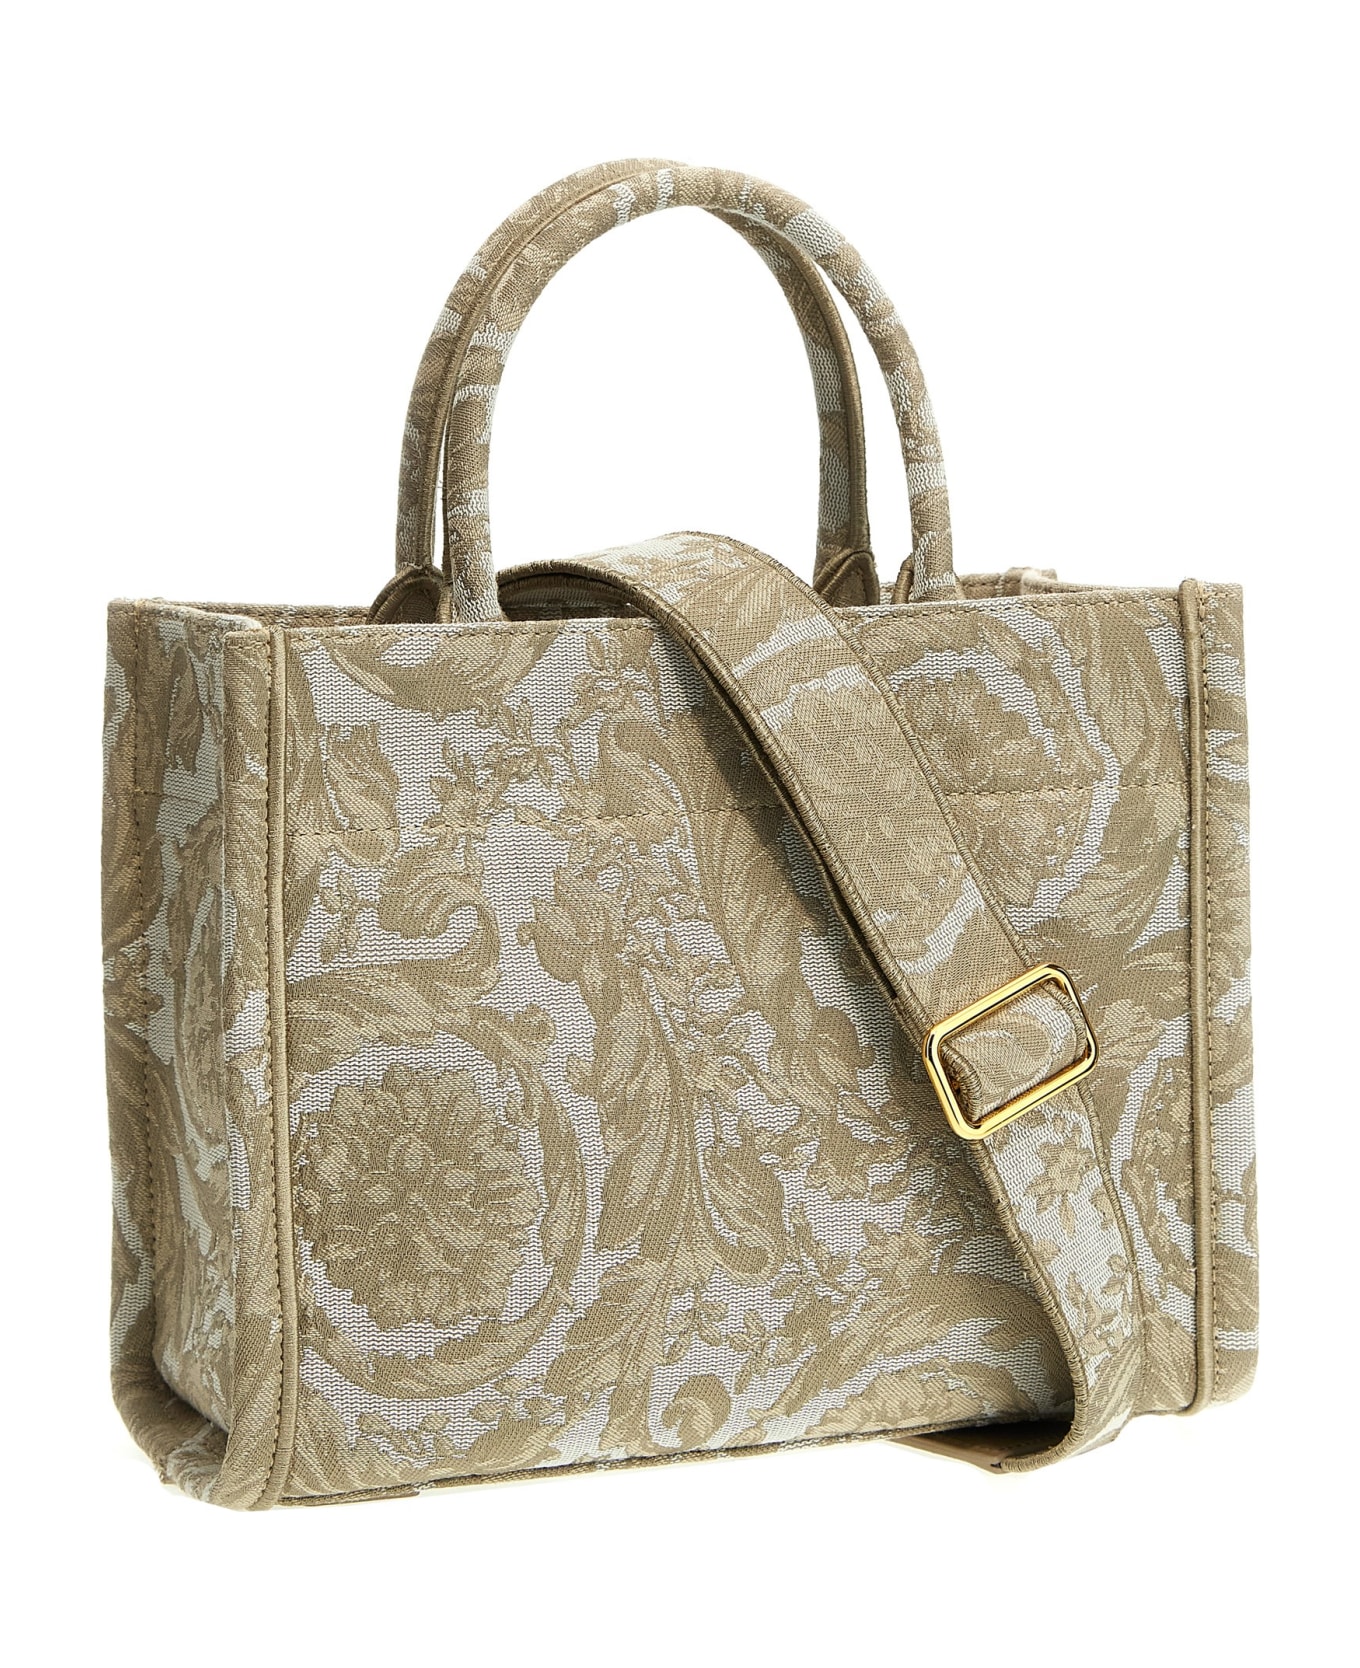 Versace 'athena' Small Shopping Bag - NEUTRALS